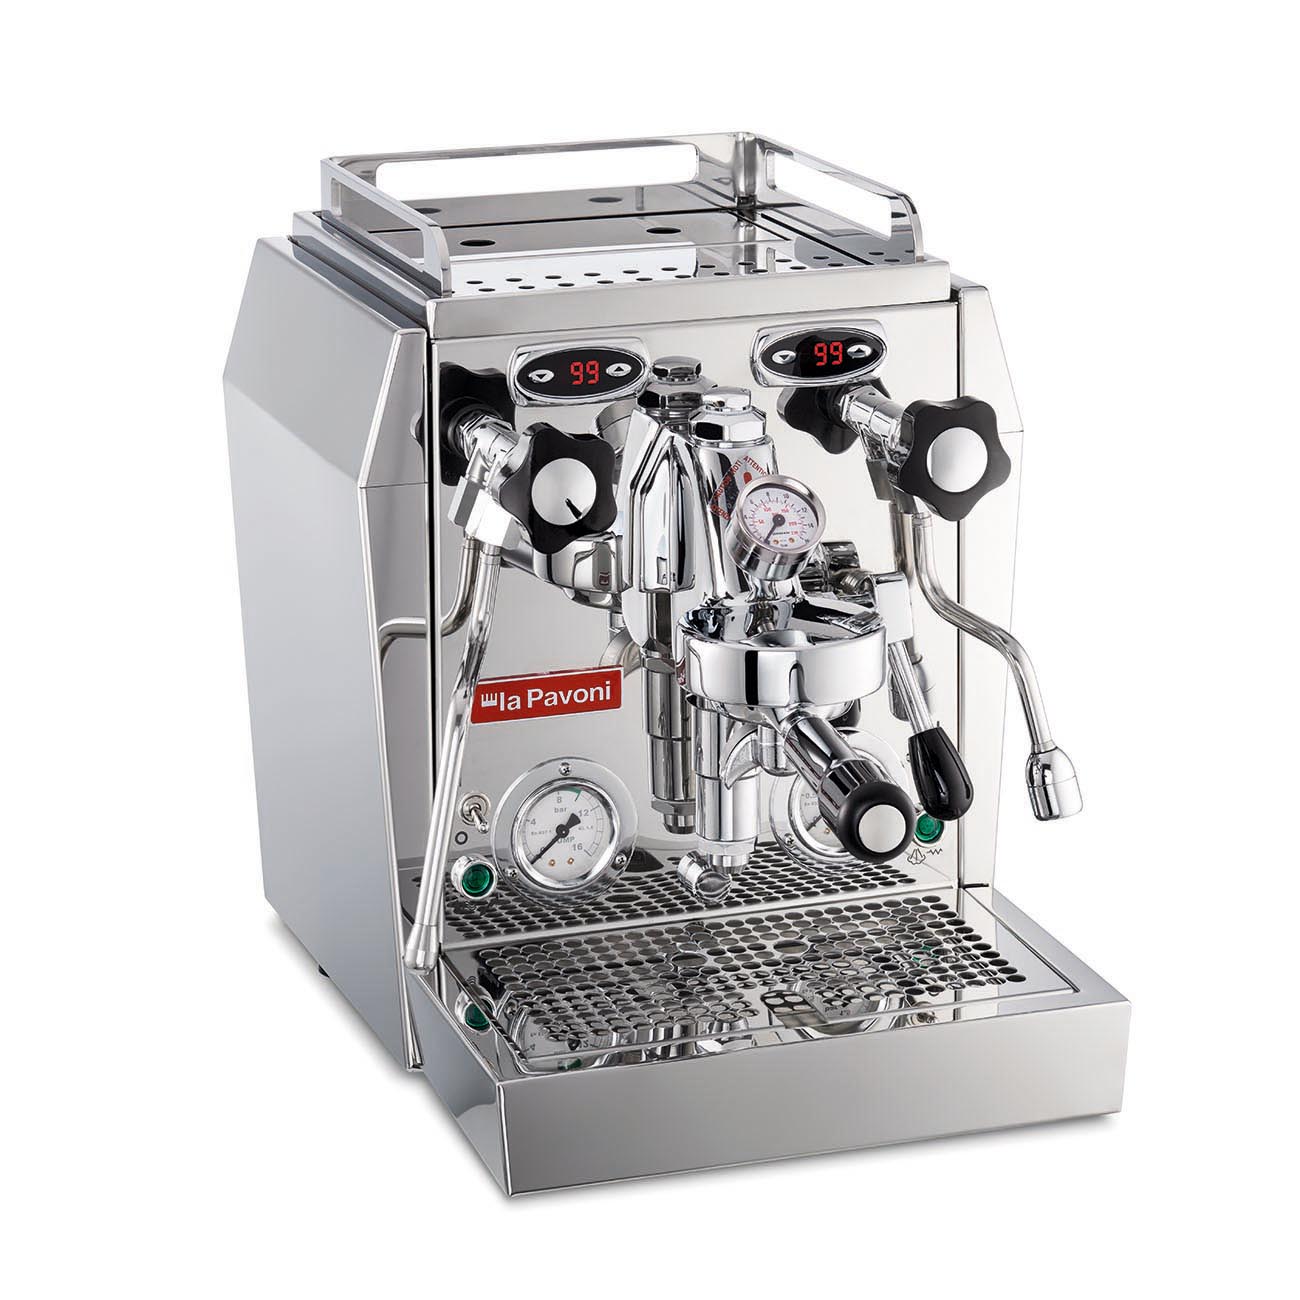 Espresso Coffee Machine Stainless steel | Smeg.com